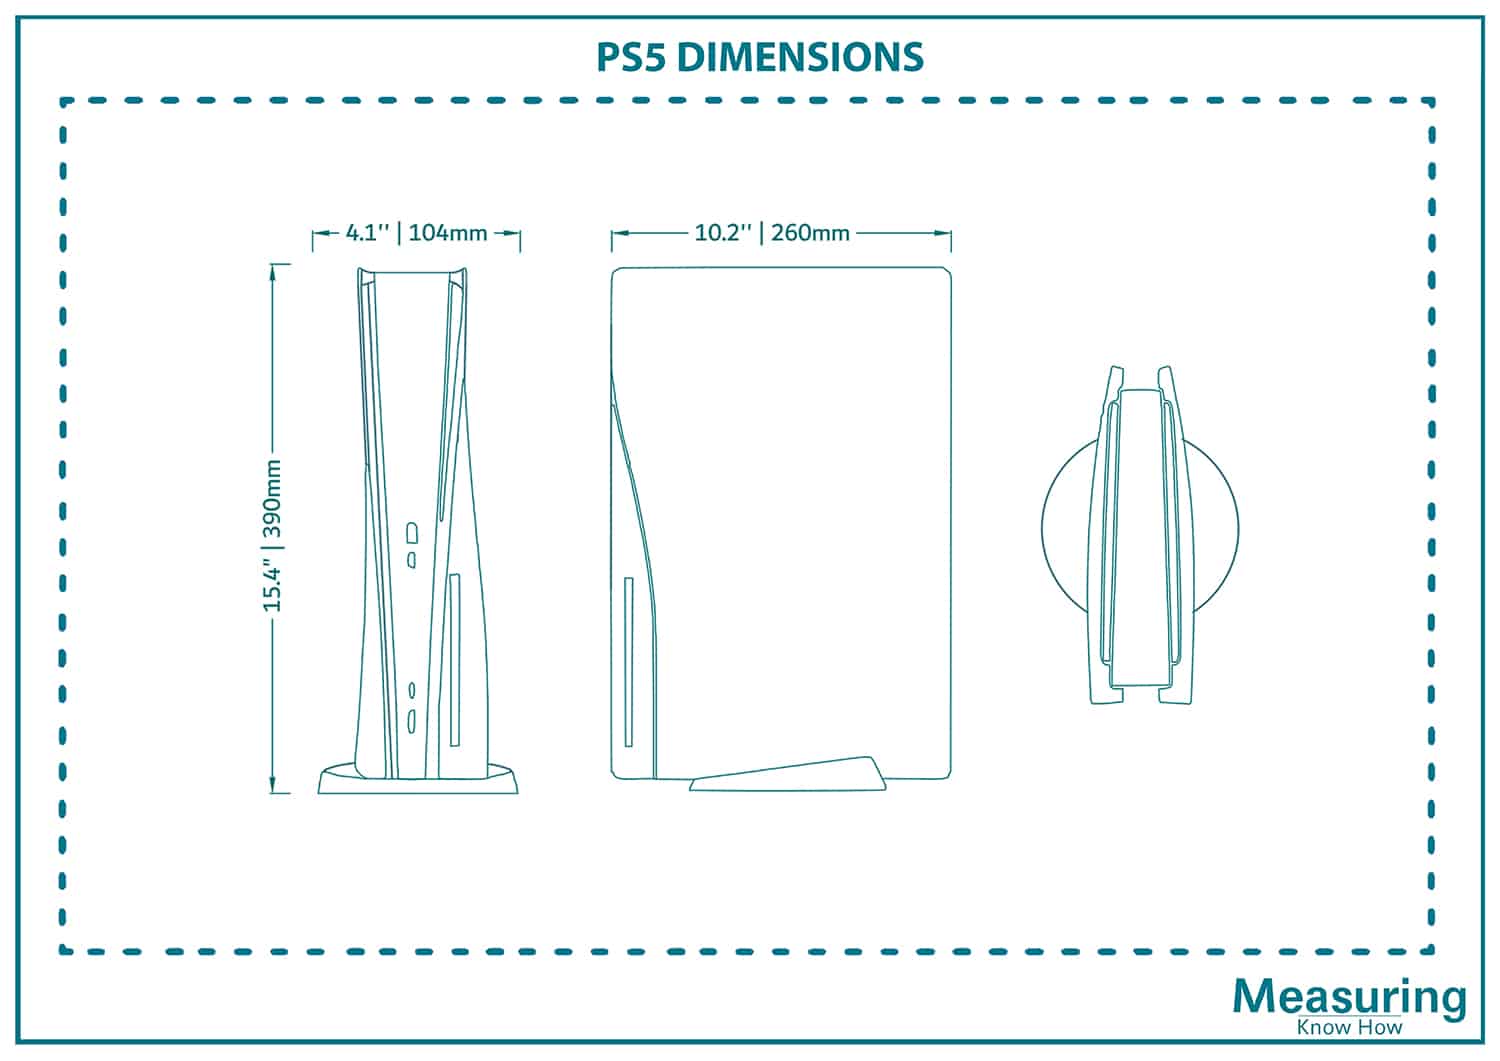 PS5 dimensions